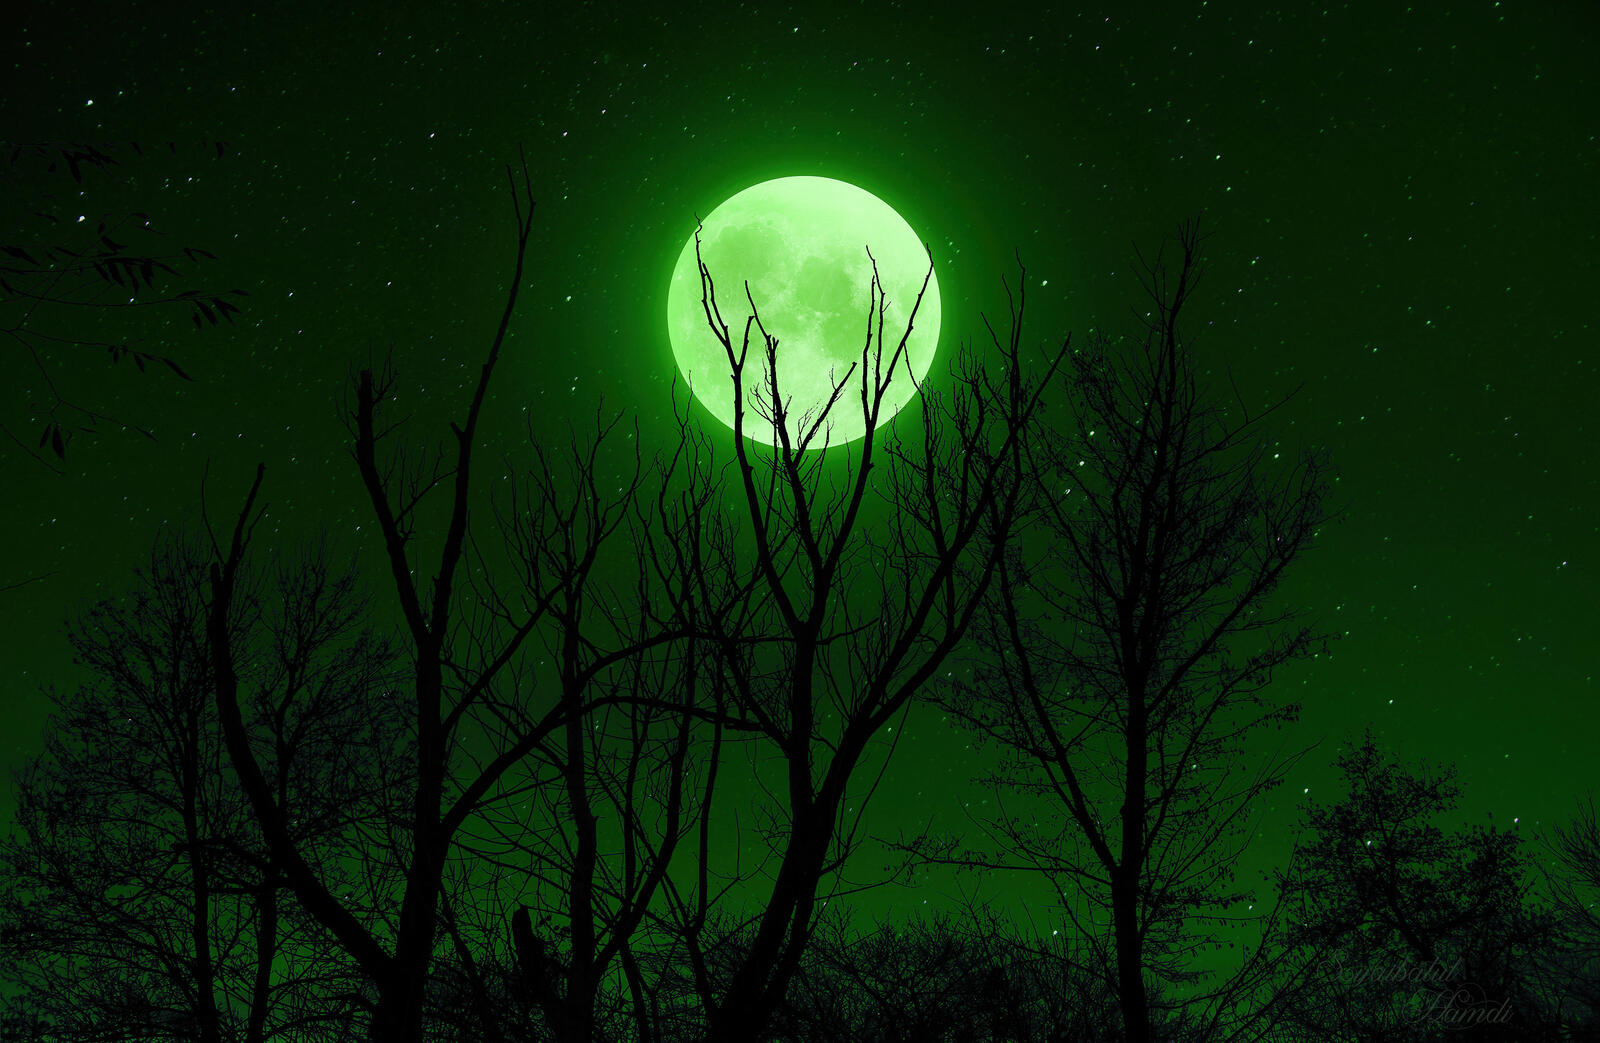 Free photo The green moon beneath the tree trunks